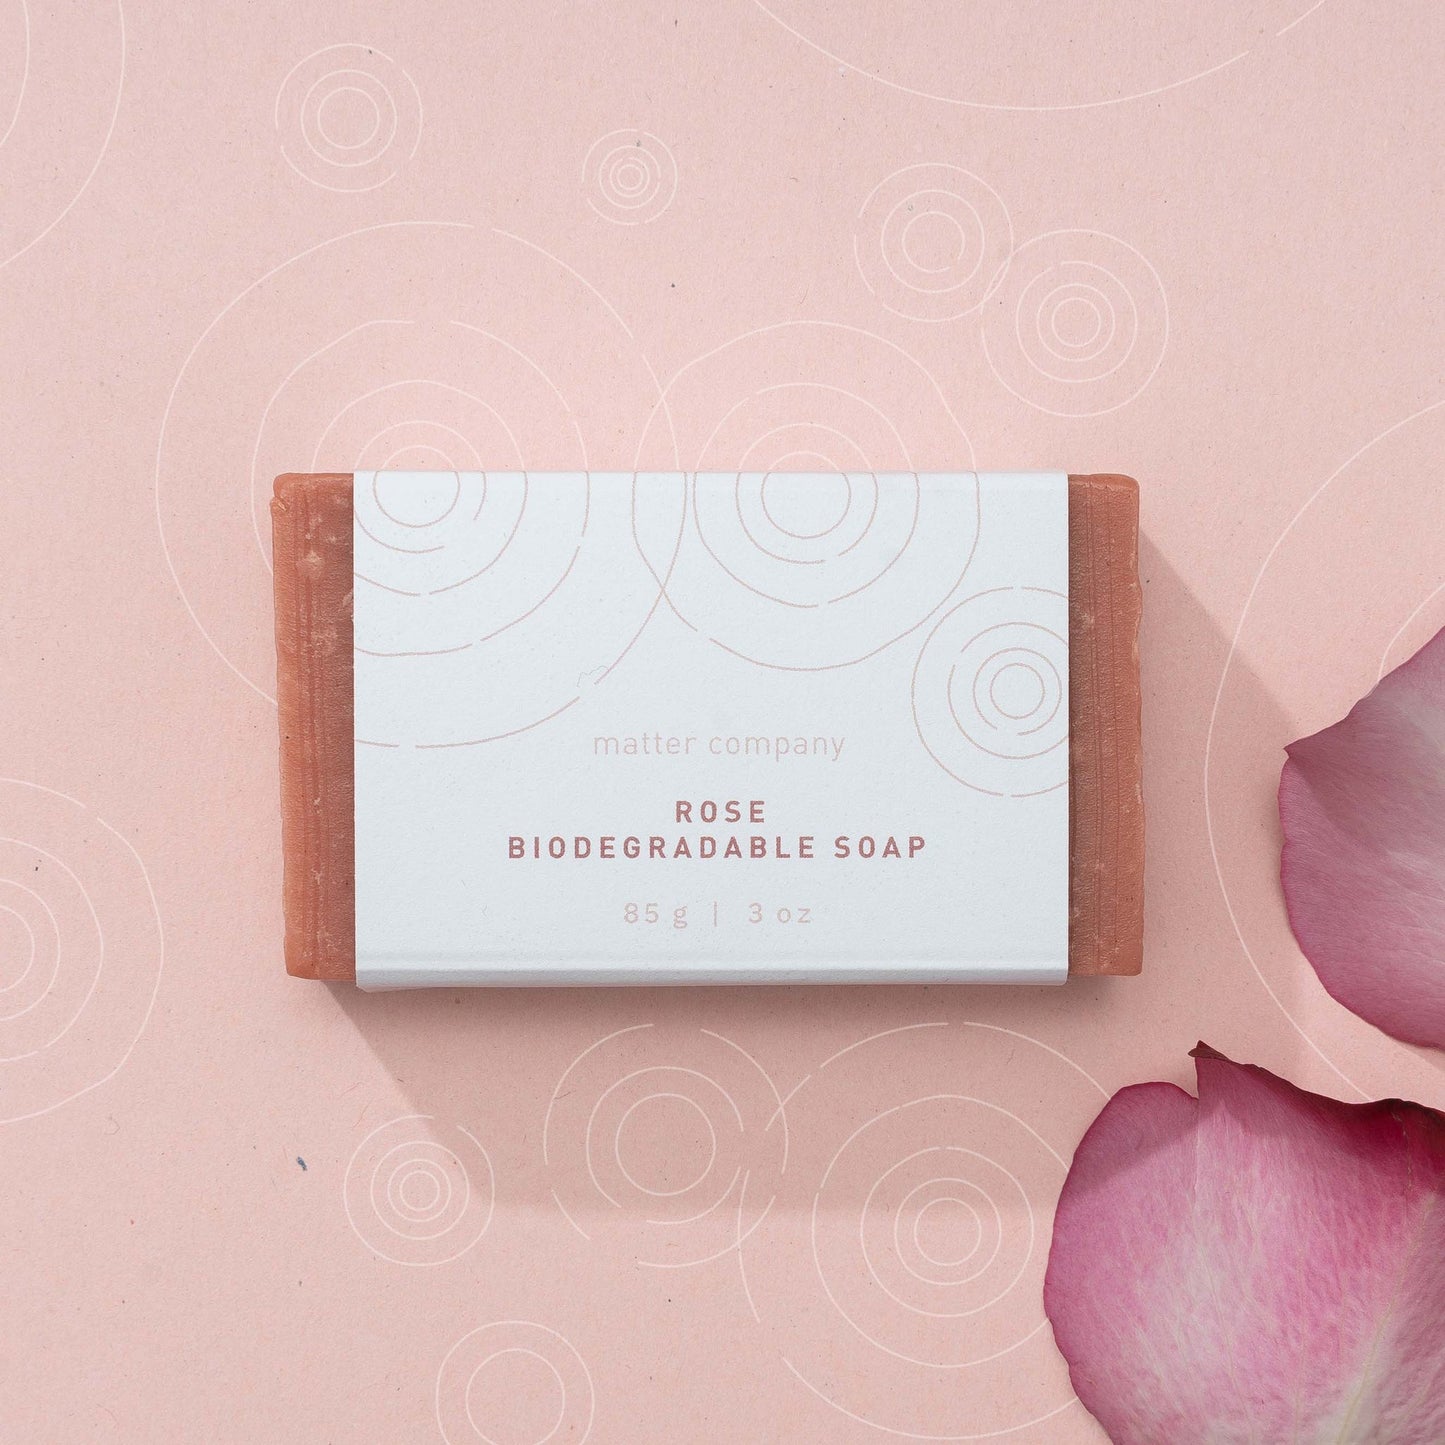 Rose Biodegradable Soap